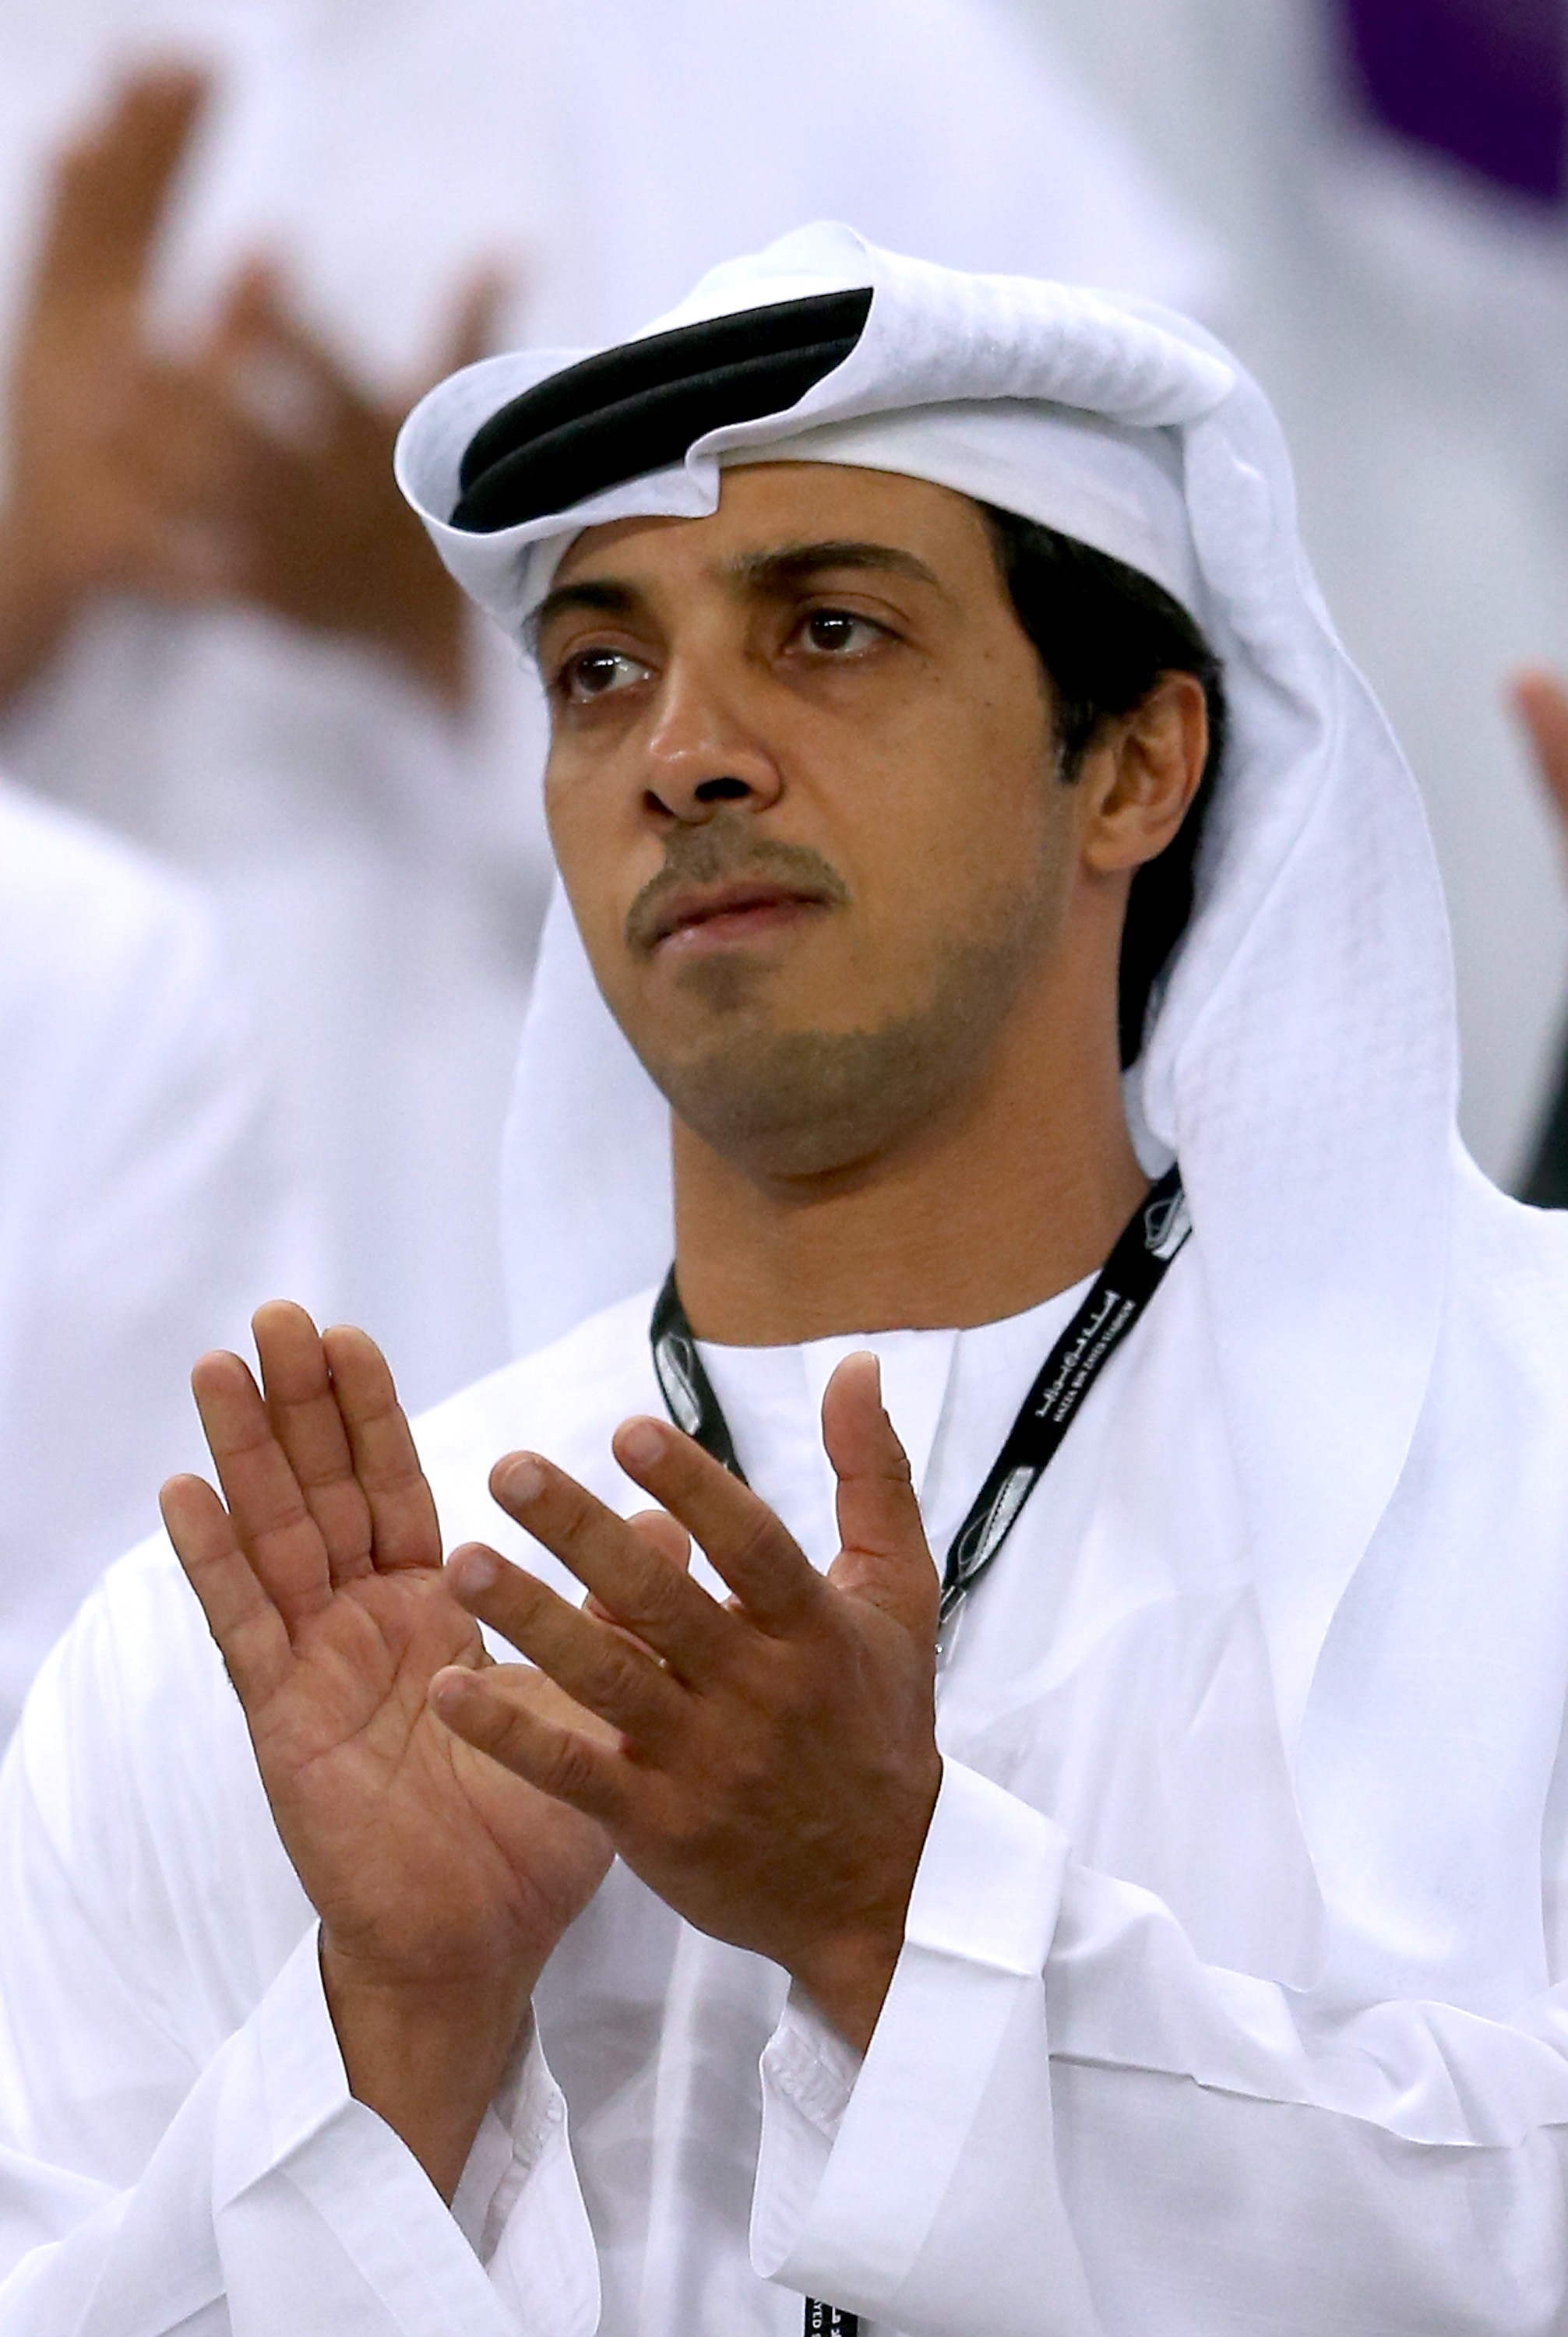 Mansour bin Zayed Al Nahyan photo 3